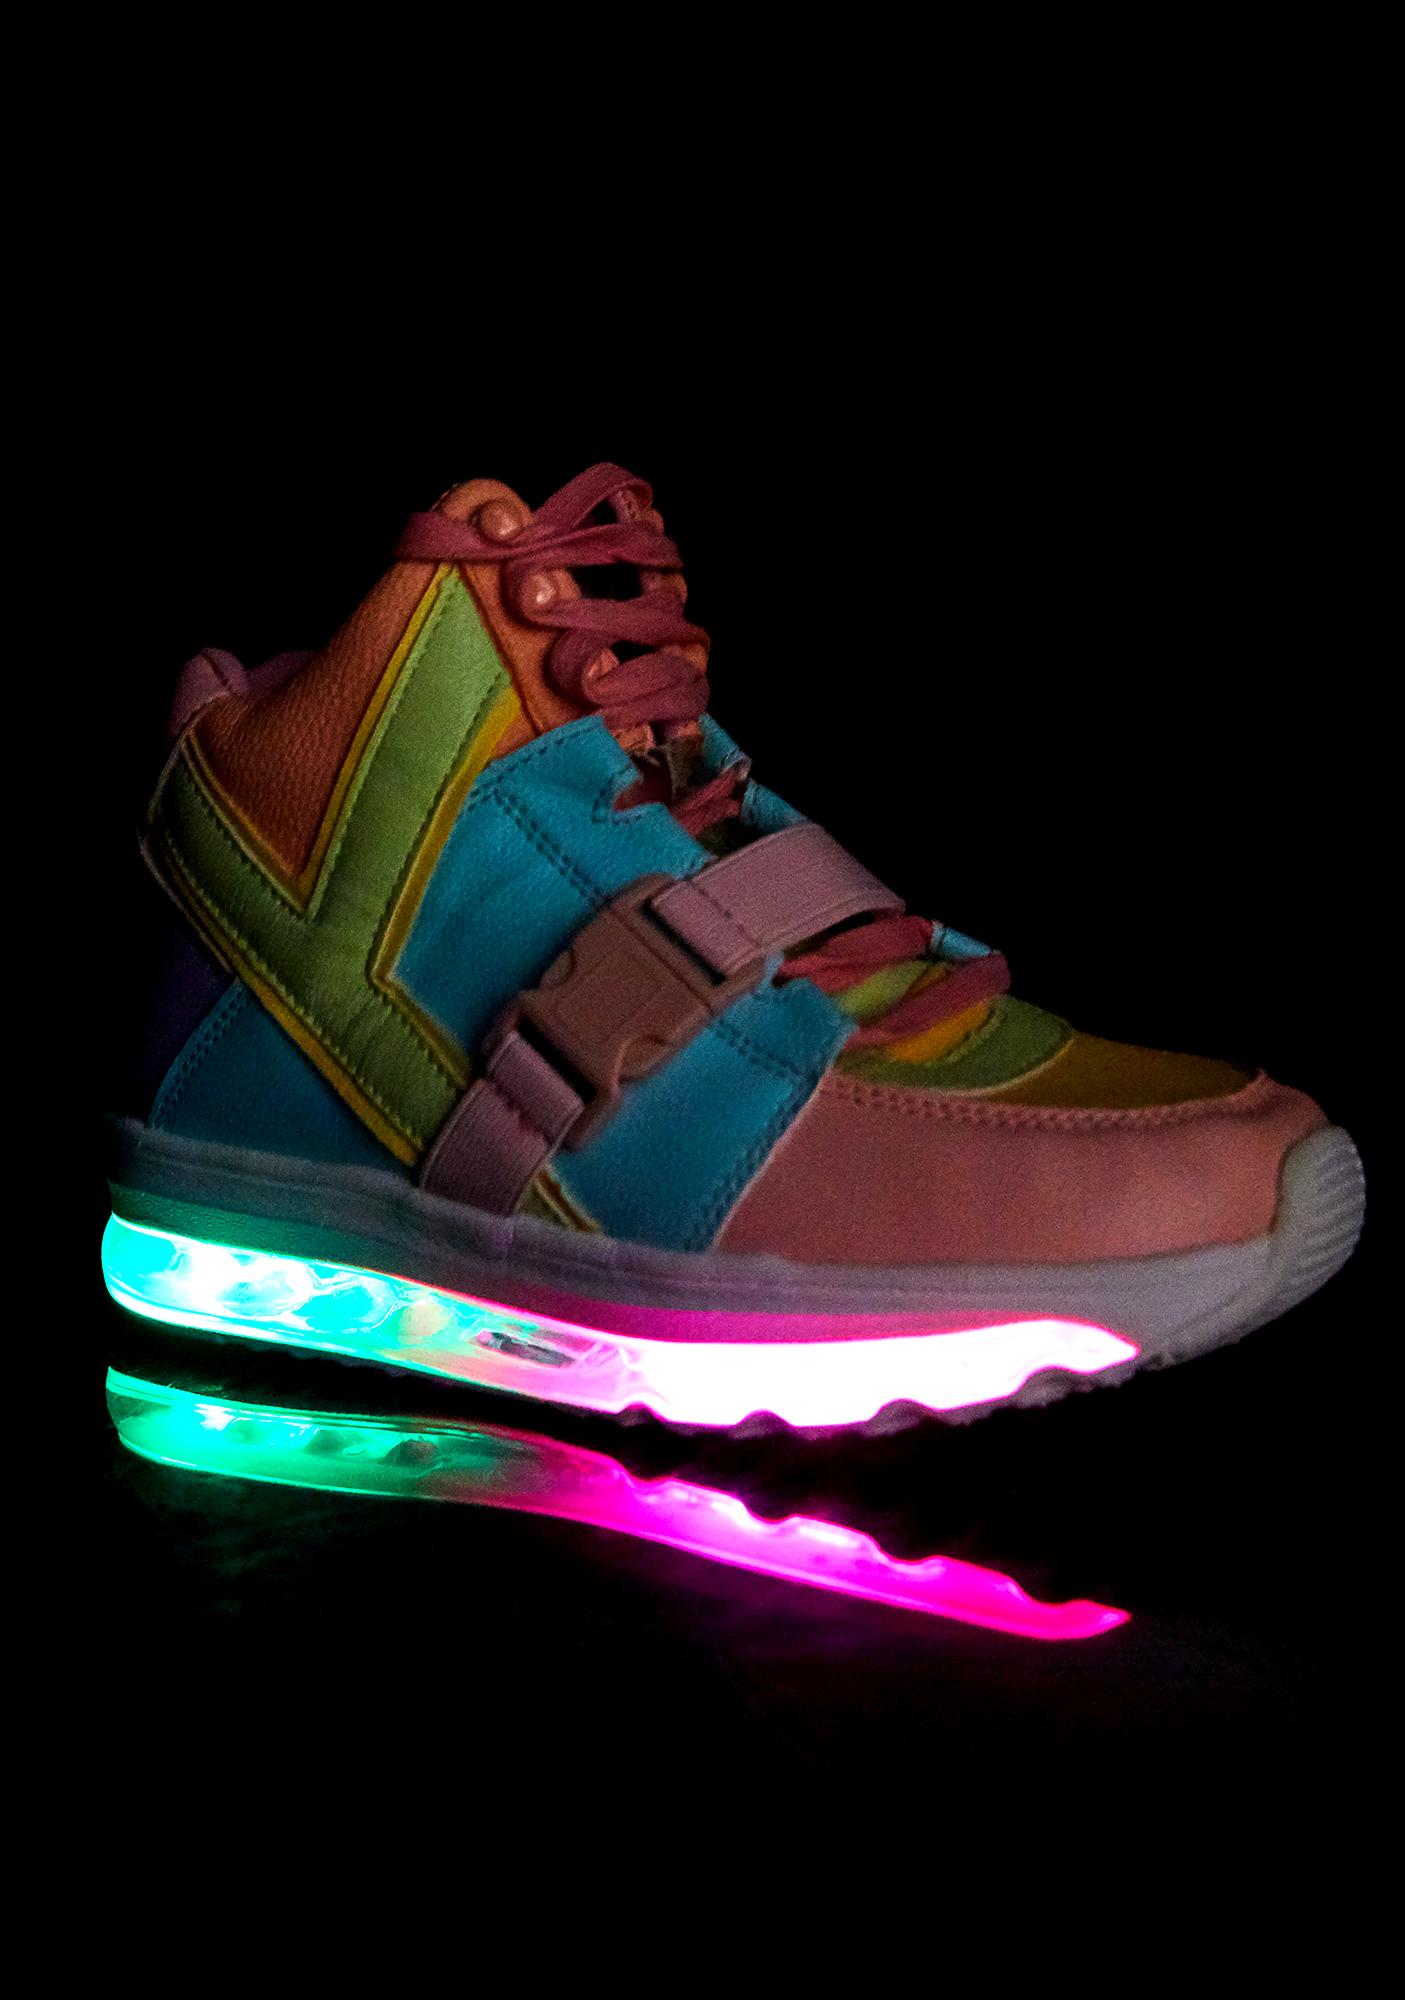 yru light up sneakers